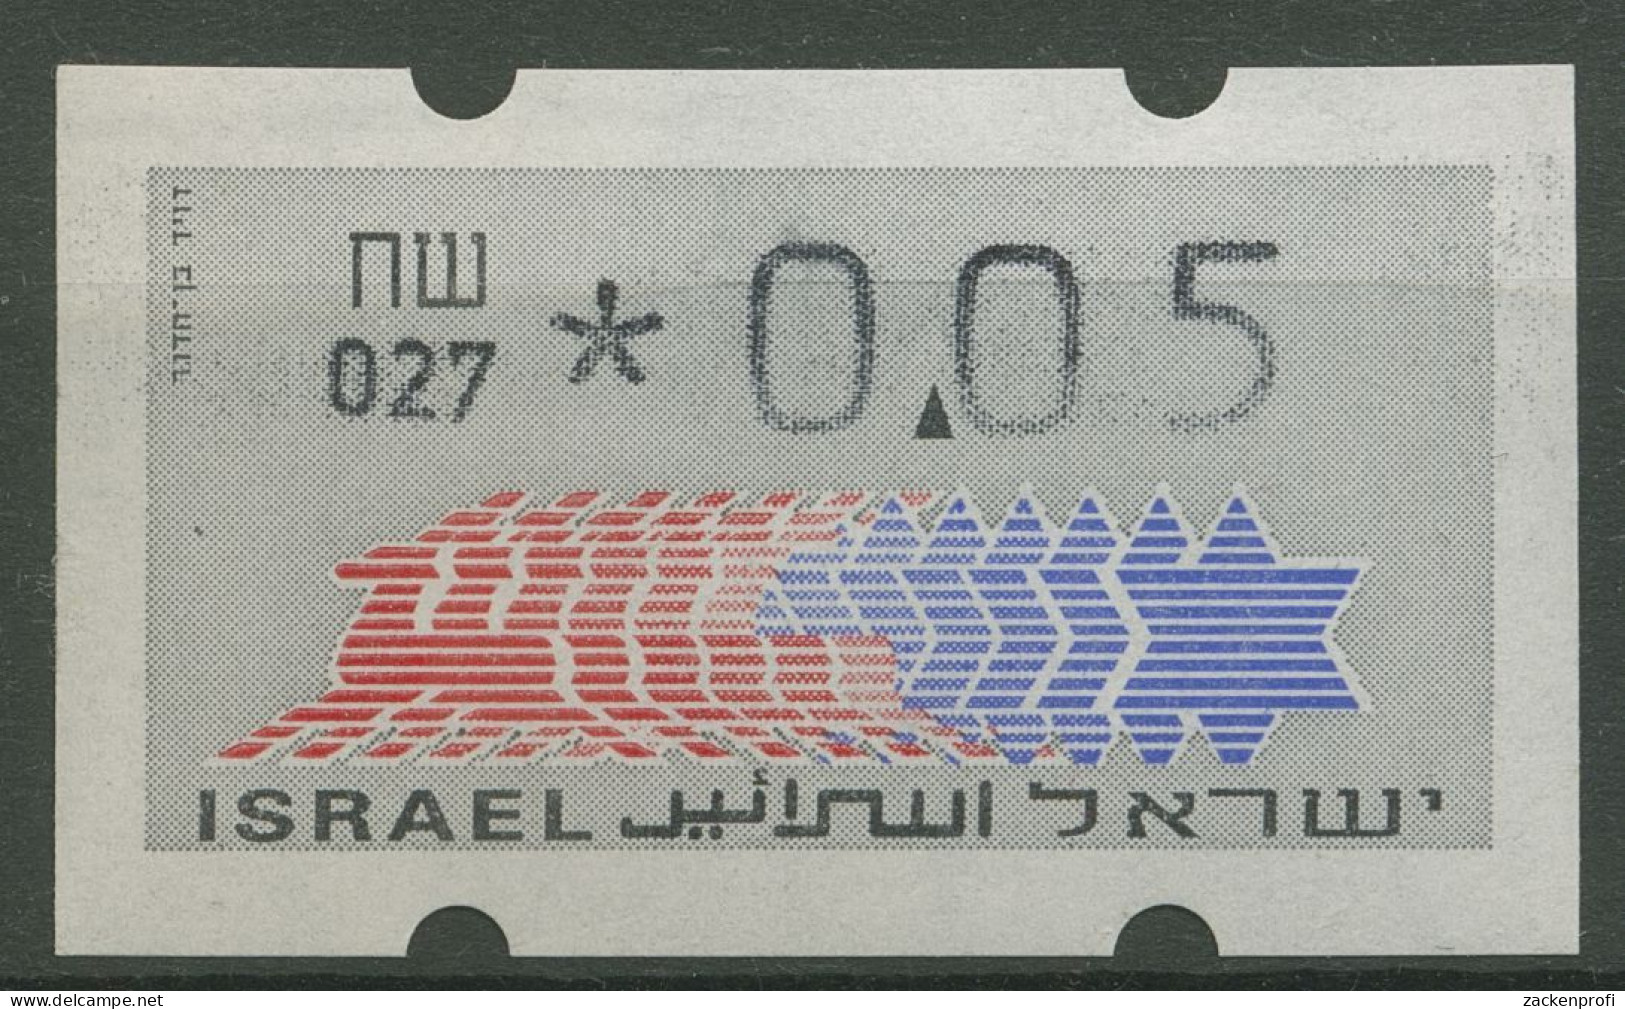 Israel ATM 1990 Hirsch Automat 027 Einzelwert ATM 3.3.27 Postfrisch - Franking Labels